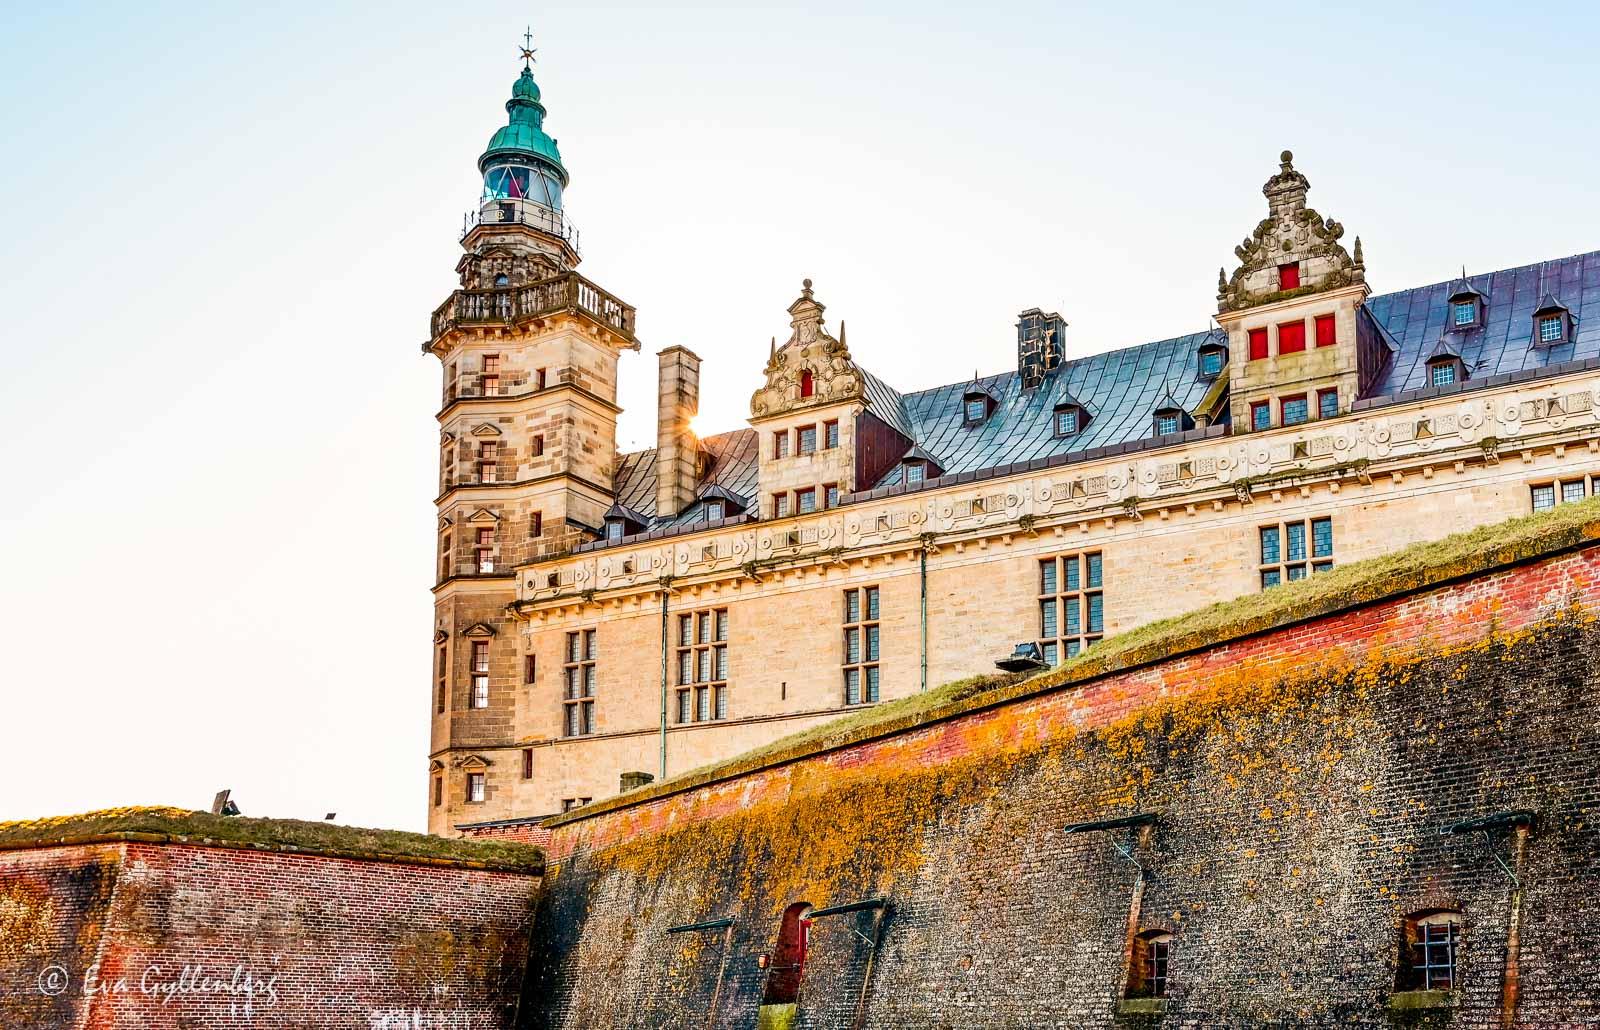 Kronborg slott